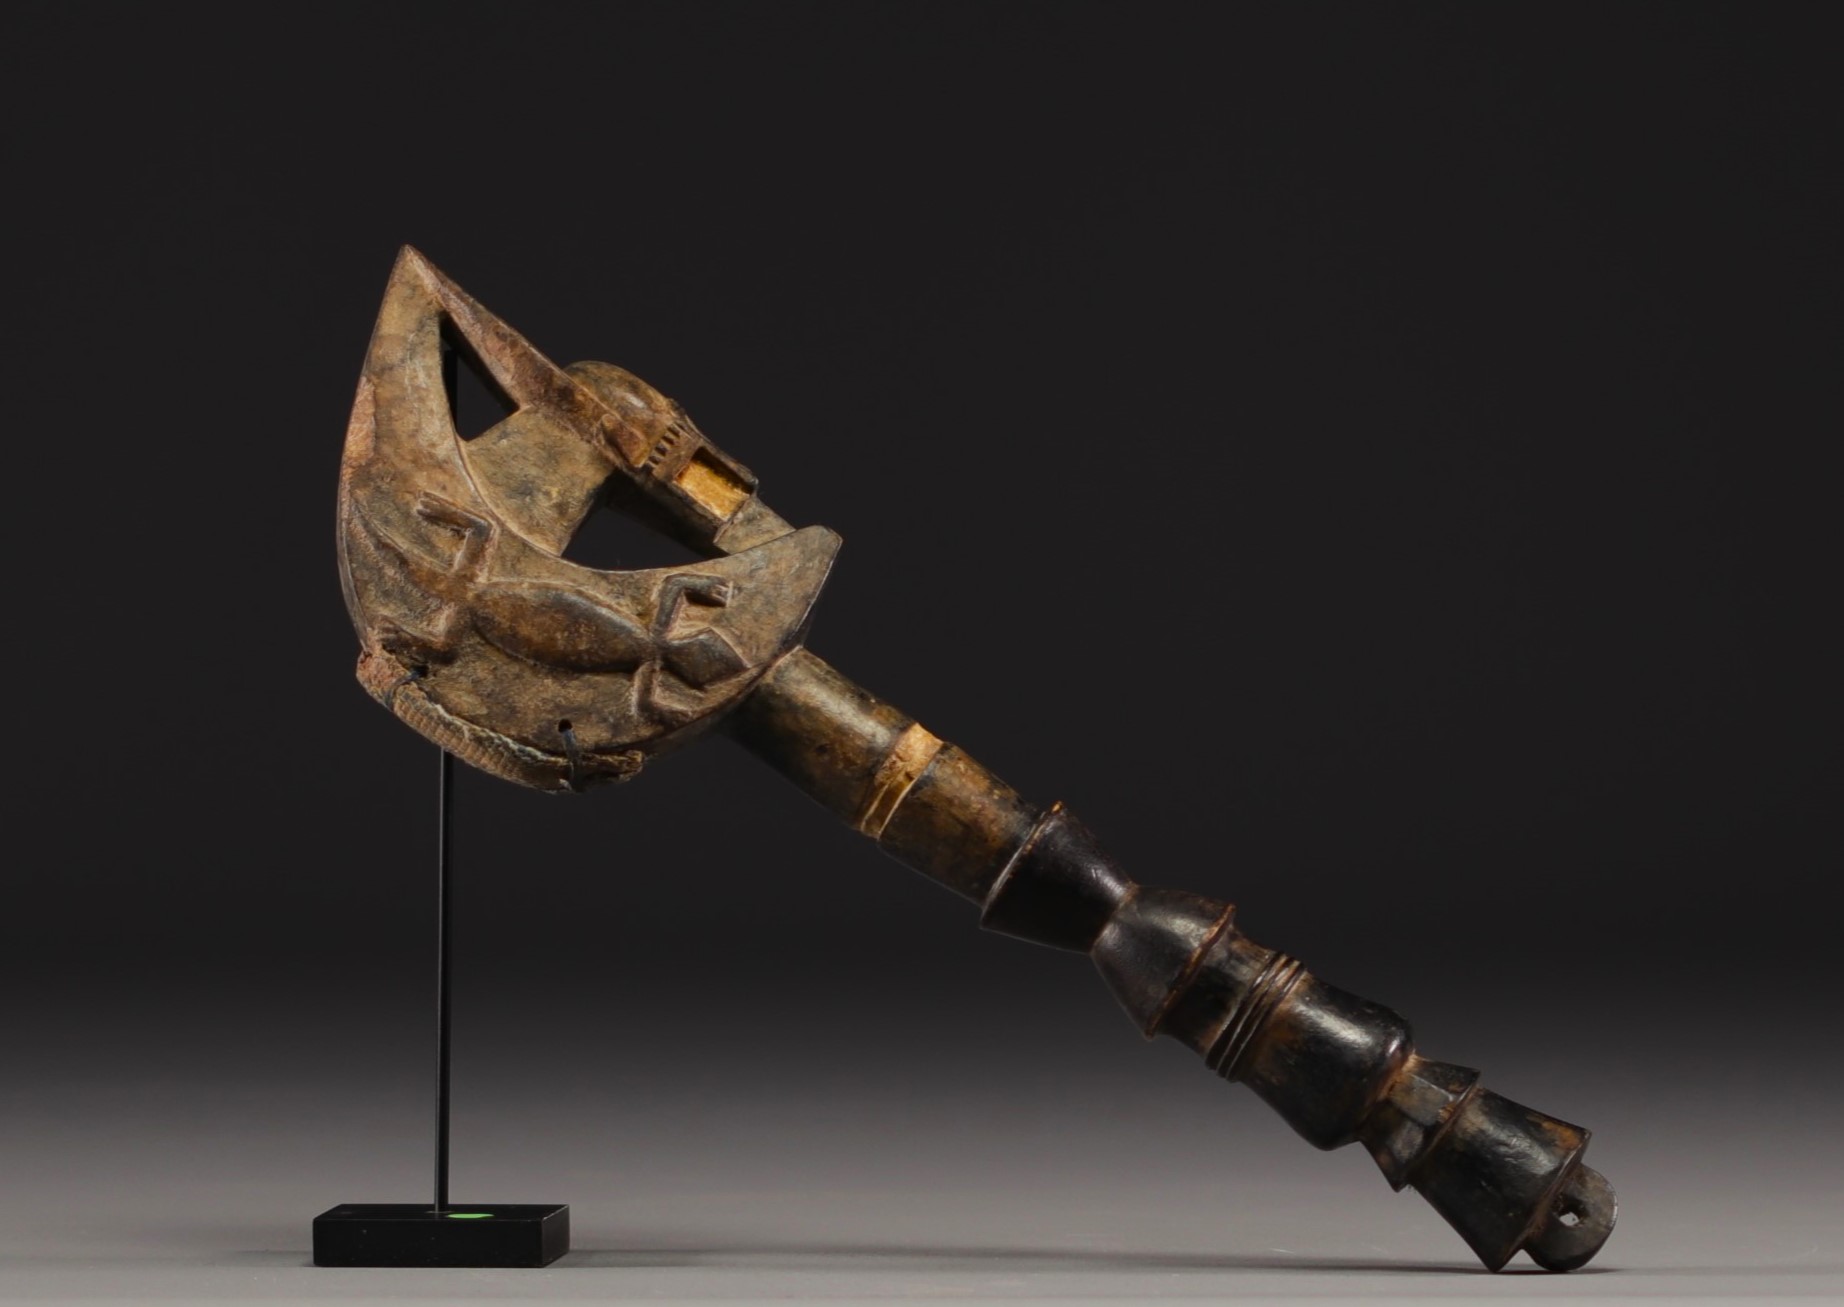 Bell hammer - Baule - Ivory Coast - Image 3 of 5